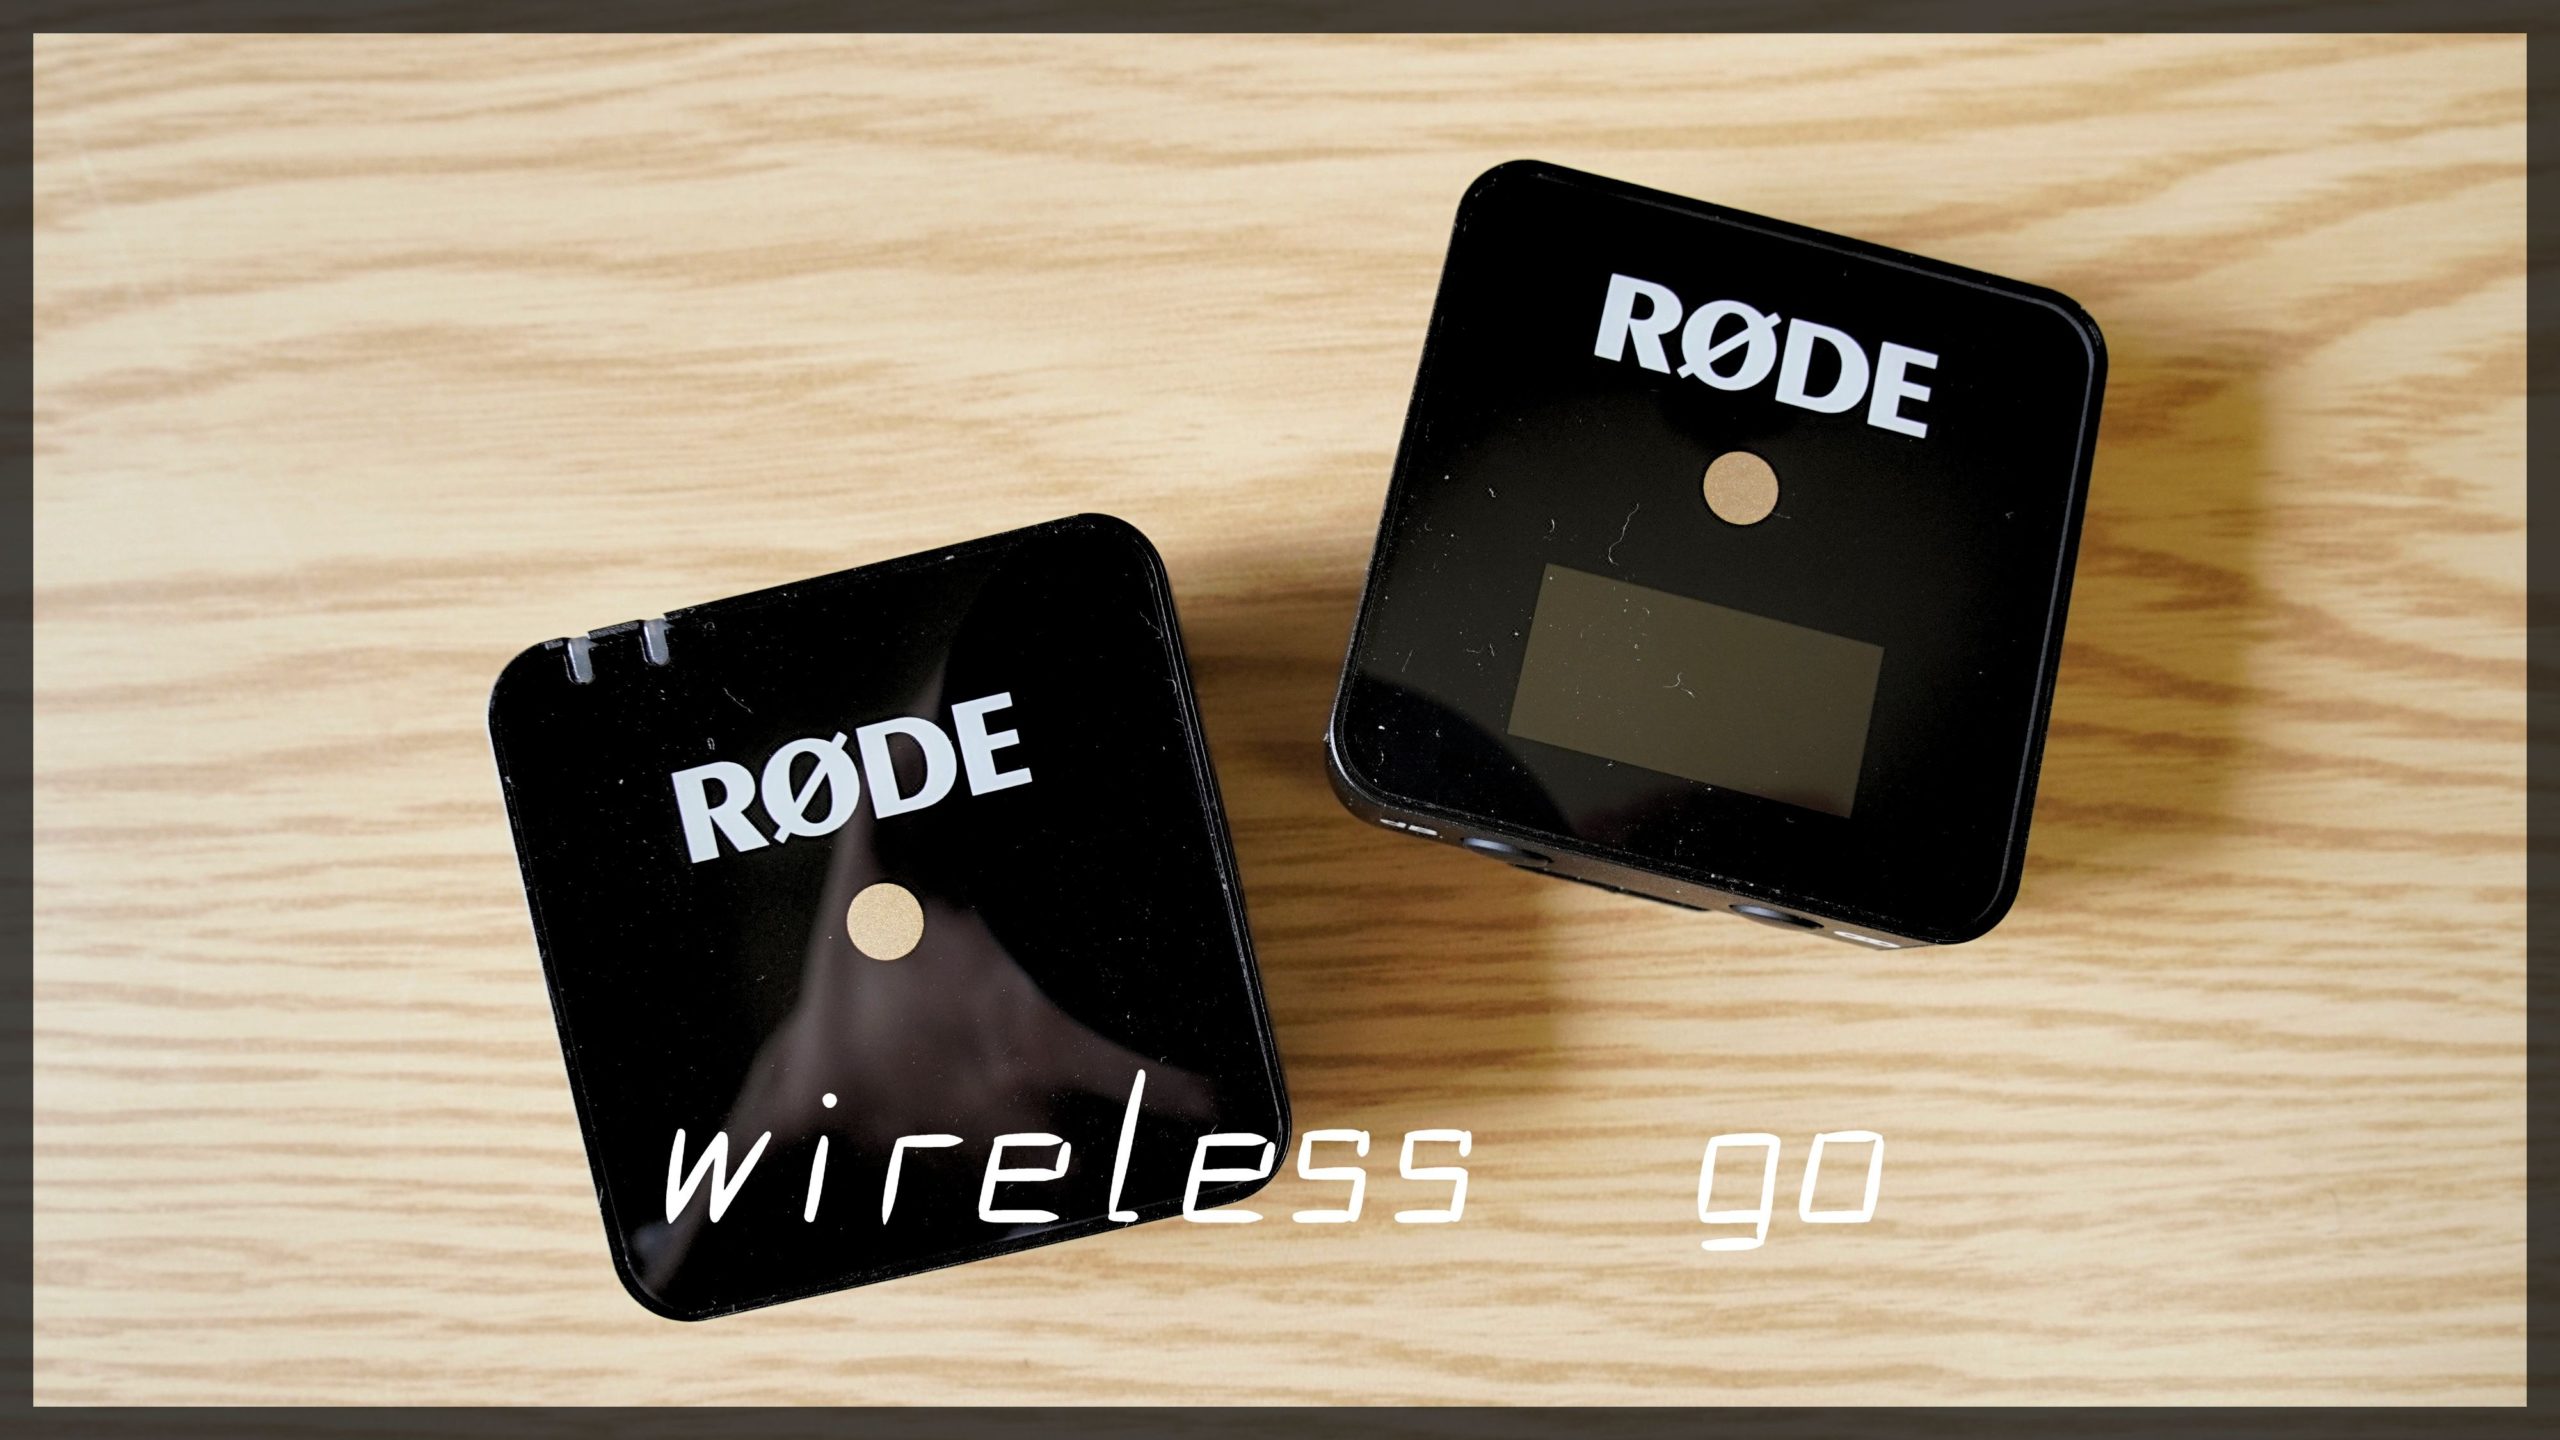 RODE wireless goが適さない人はこんな人。使ってみて分かったレビュー 